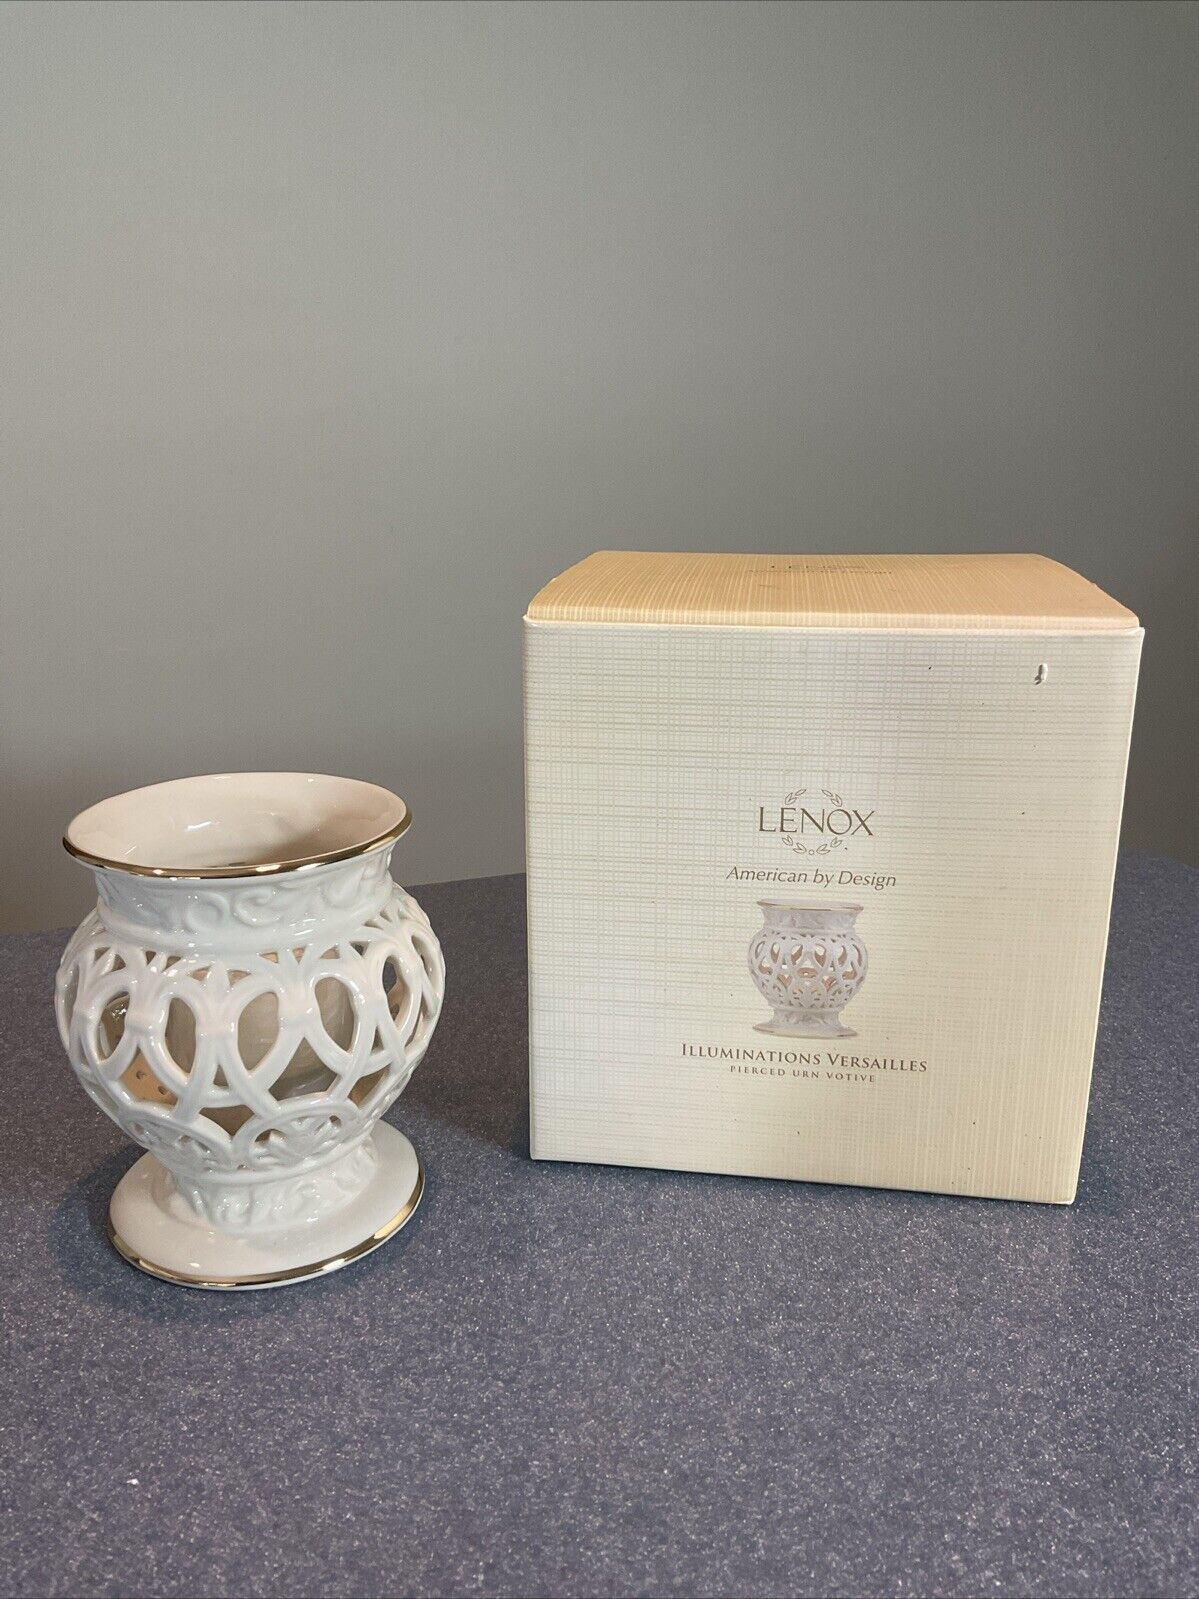 Lenox Illuminations Versailles Lattice 24 KT Gold Trim Candleholder 4.5 in.